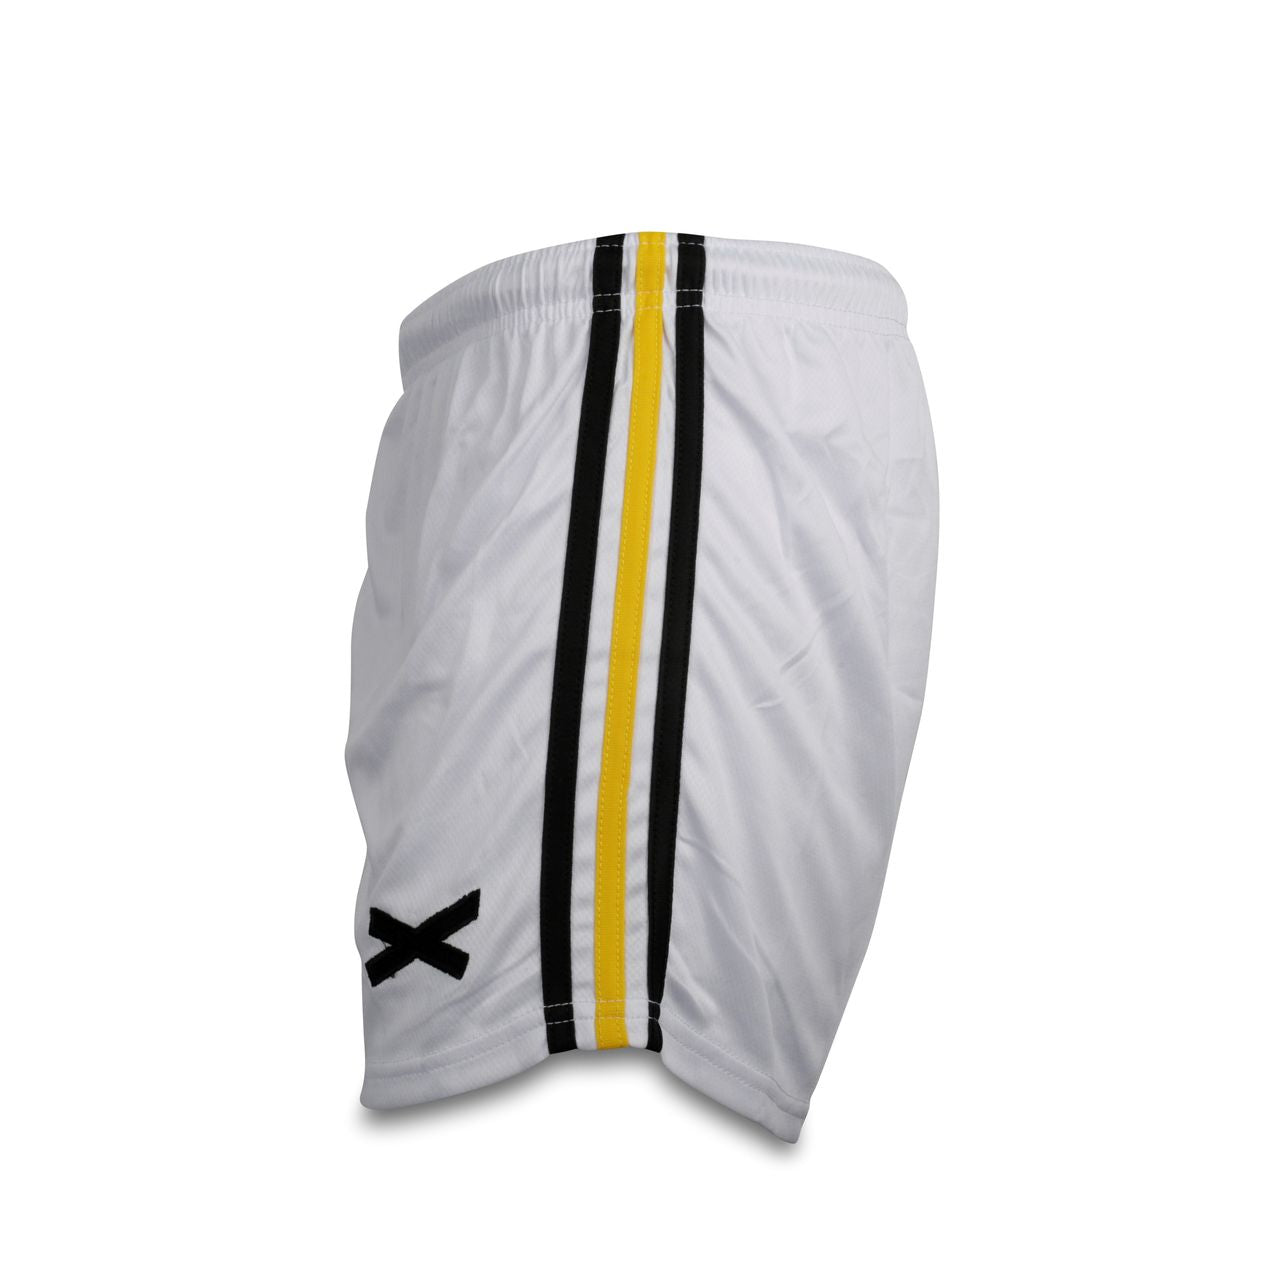 Gaelic Games X Stripe Shorts